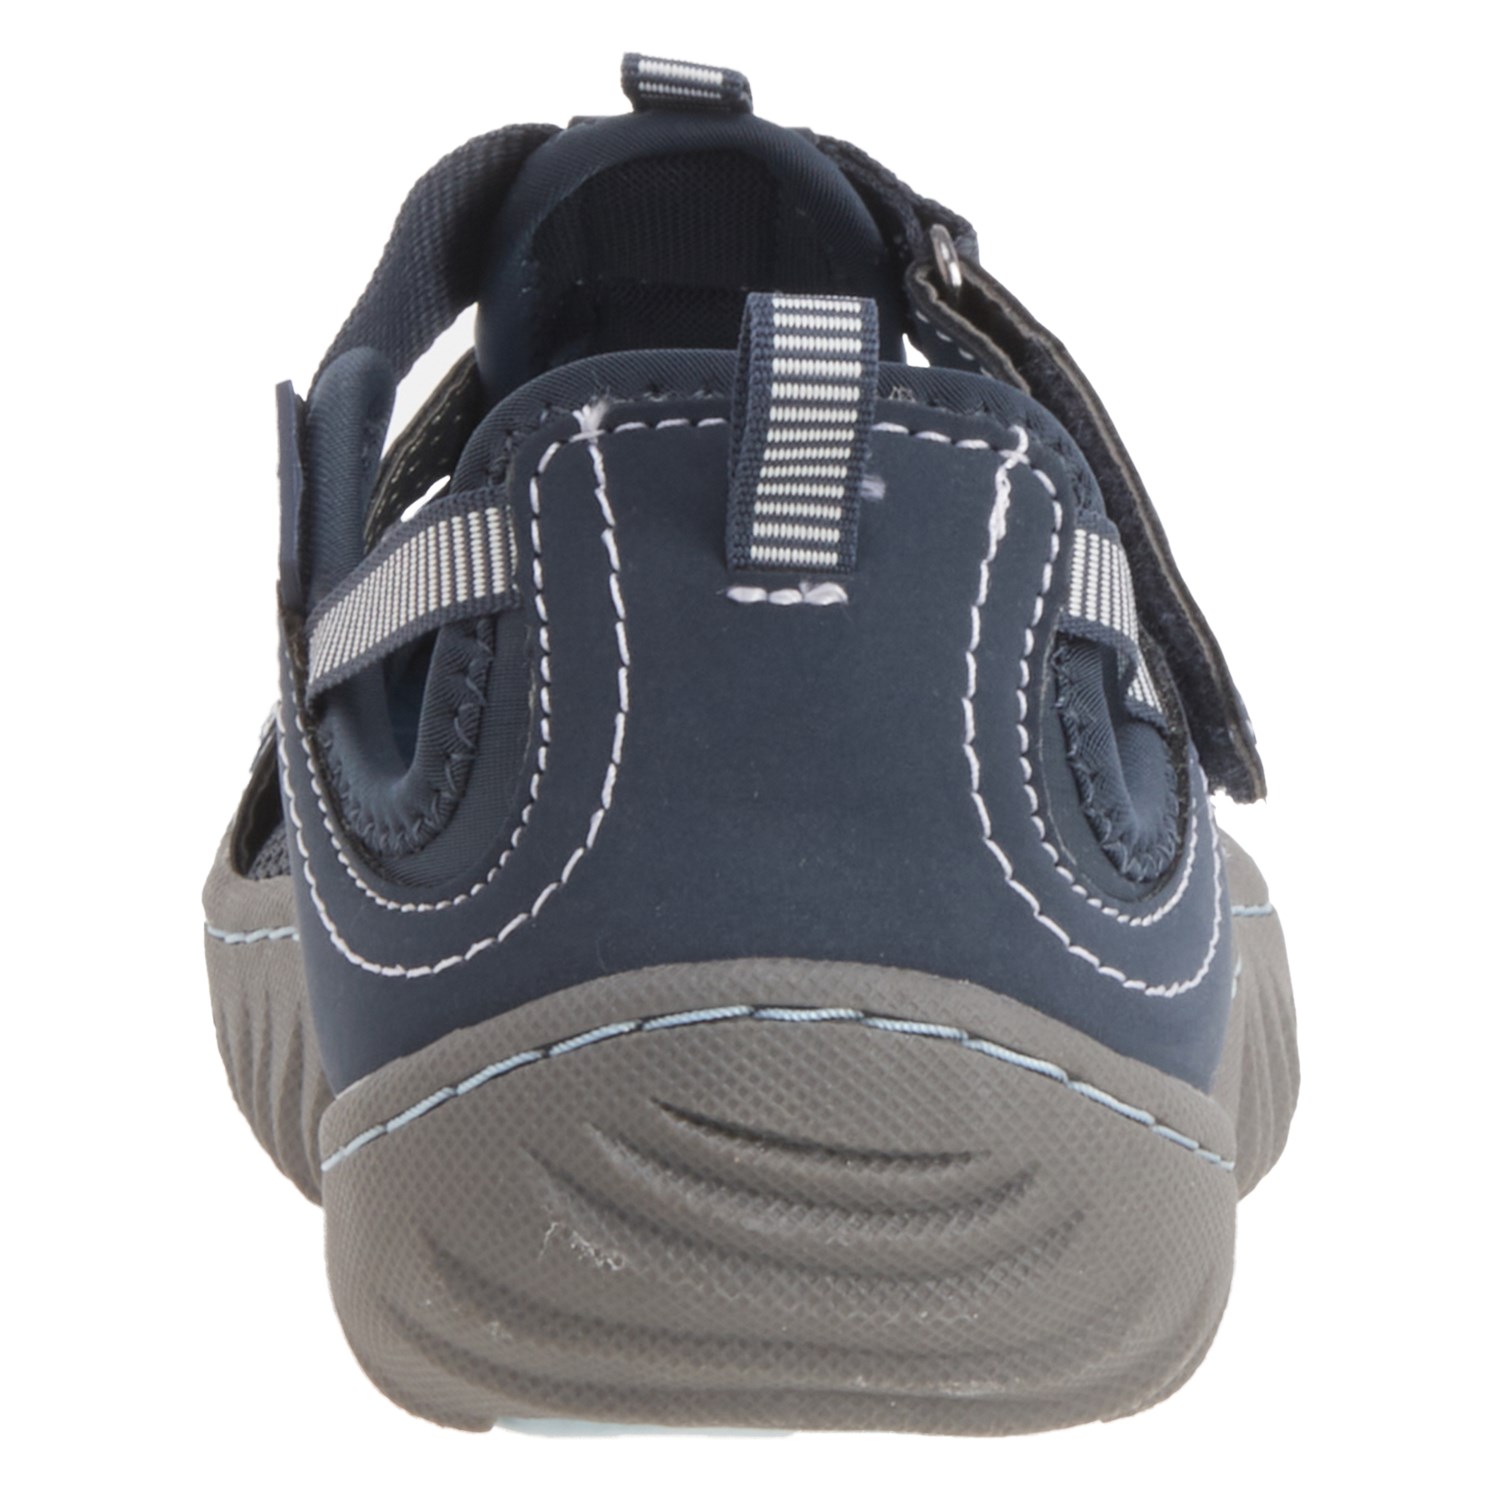 JBU BY JAMBU Regal Water Shoes (For Women) - Save 45%